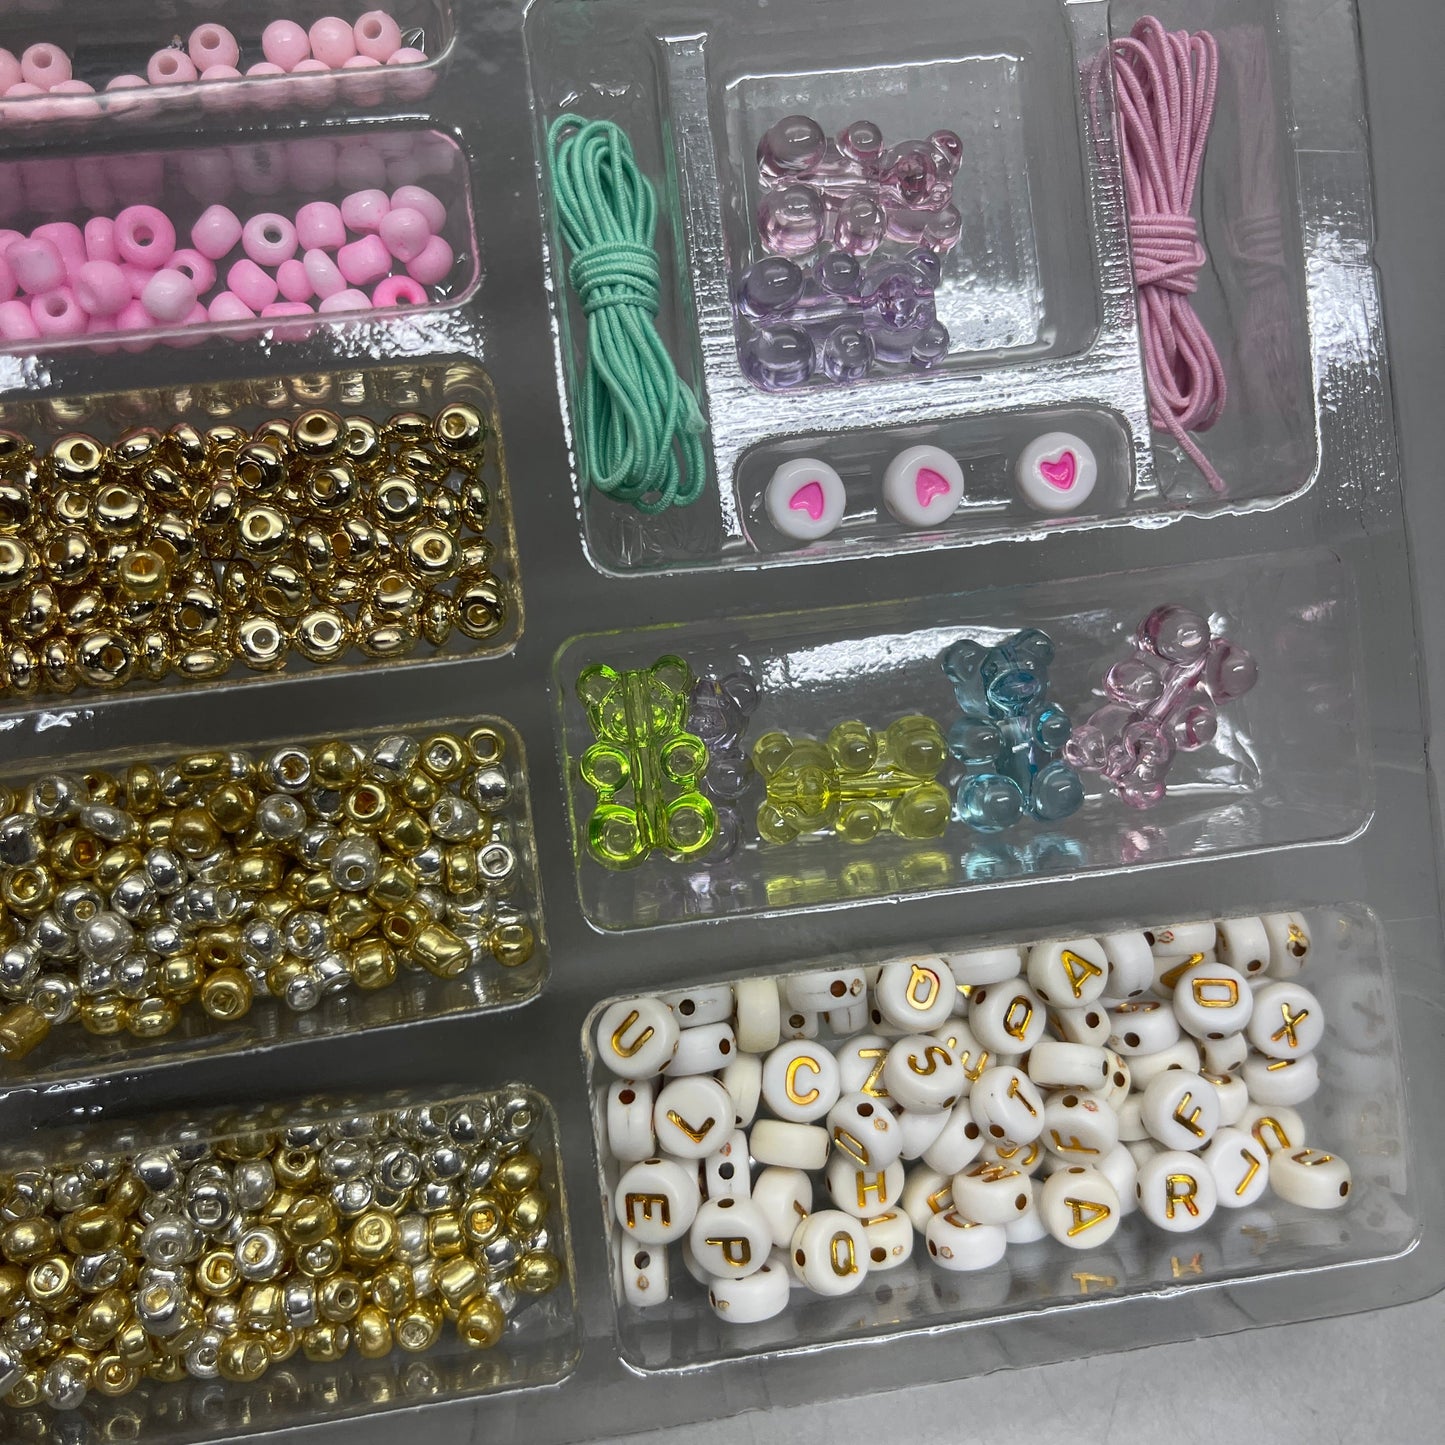 ISCREAM (3 PACK) Gummy Bear Jewelry Kit 750 pieces 770-328